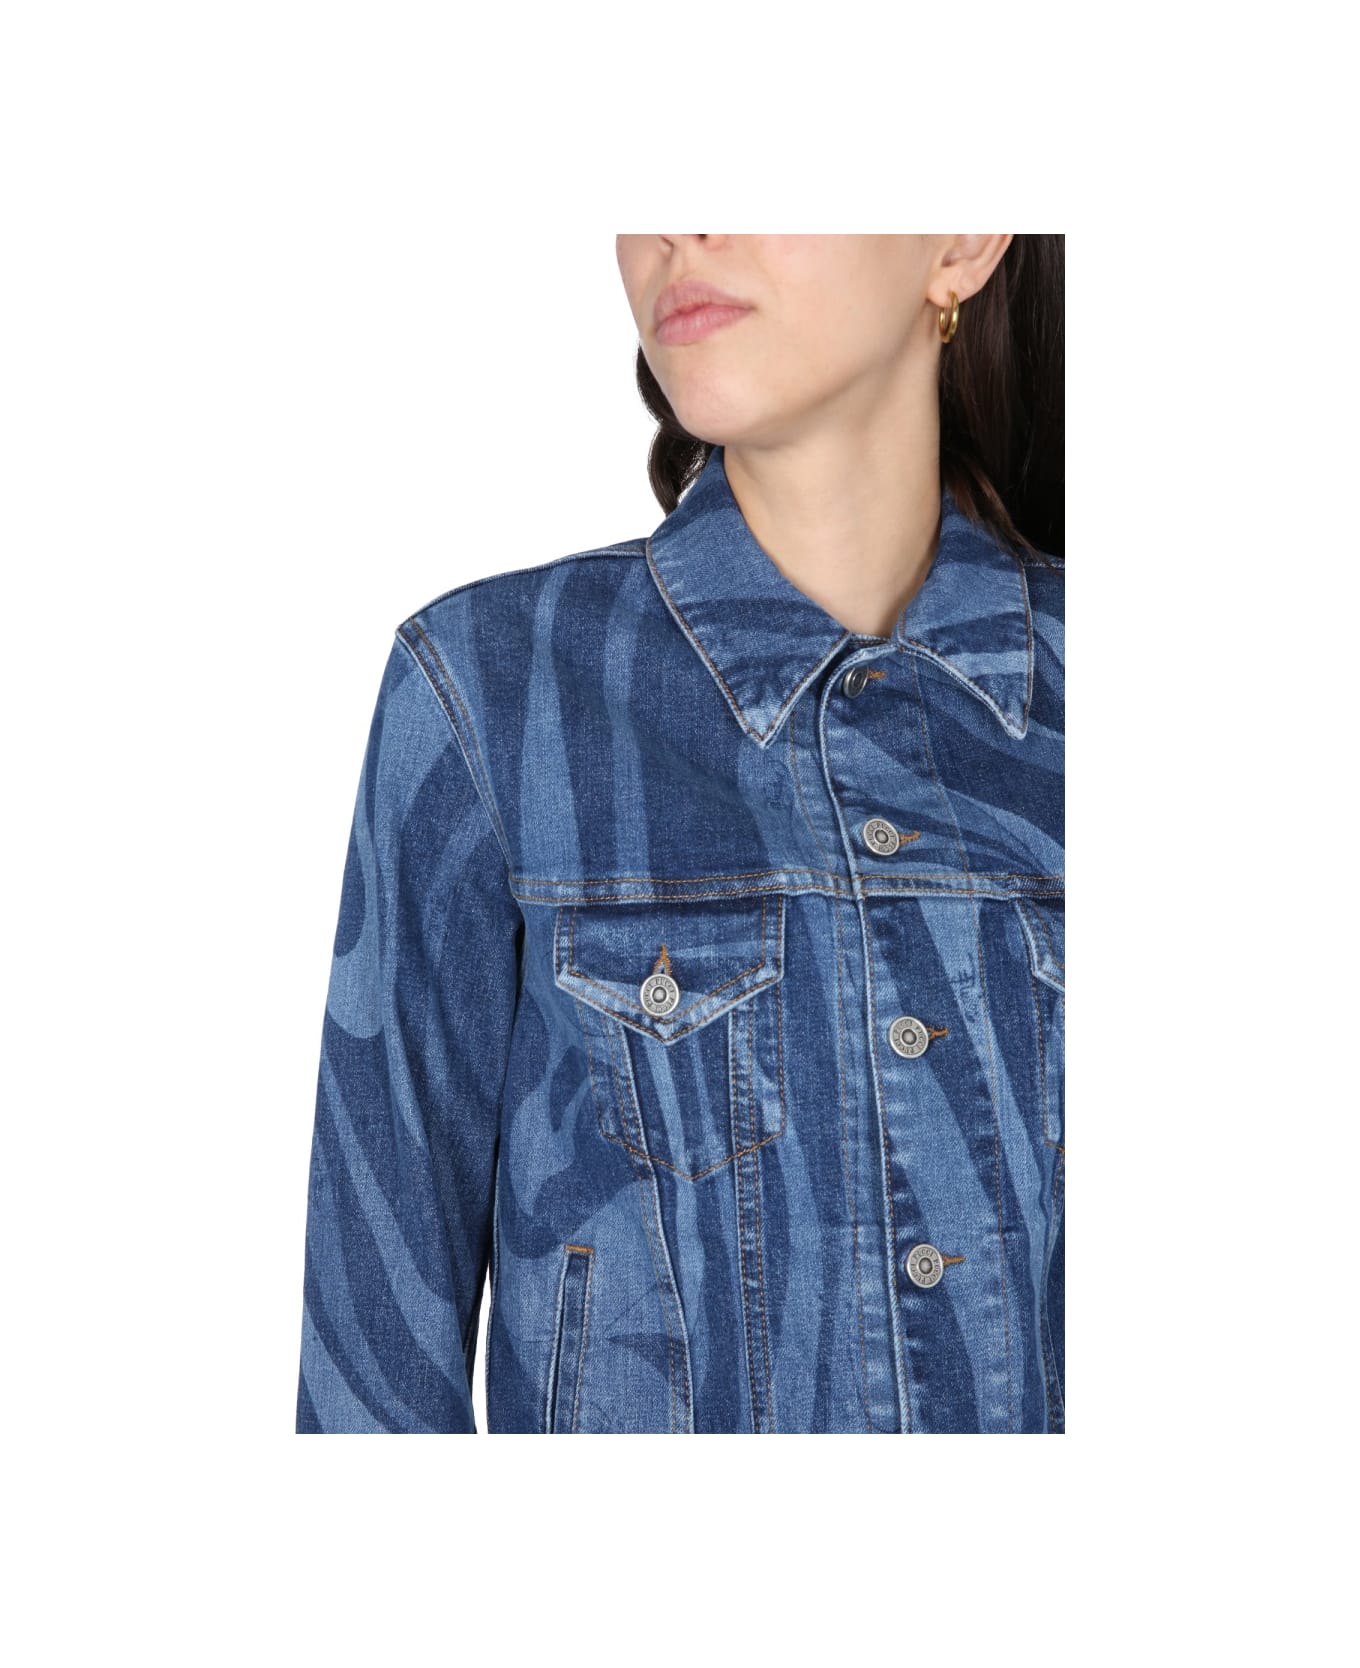 Pucci Marble Print Jacket - BLUE ジャケット